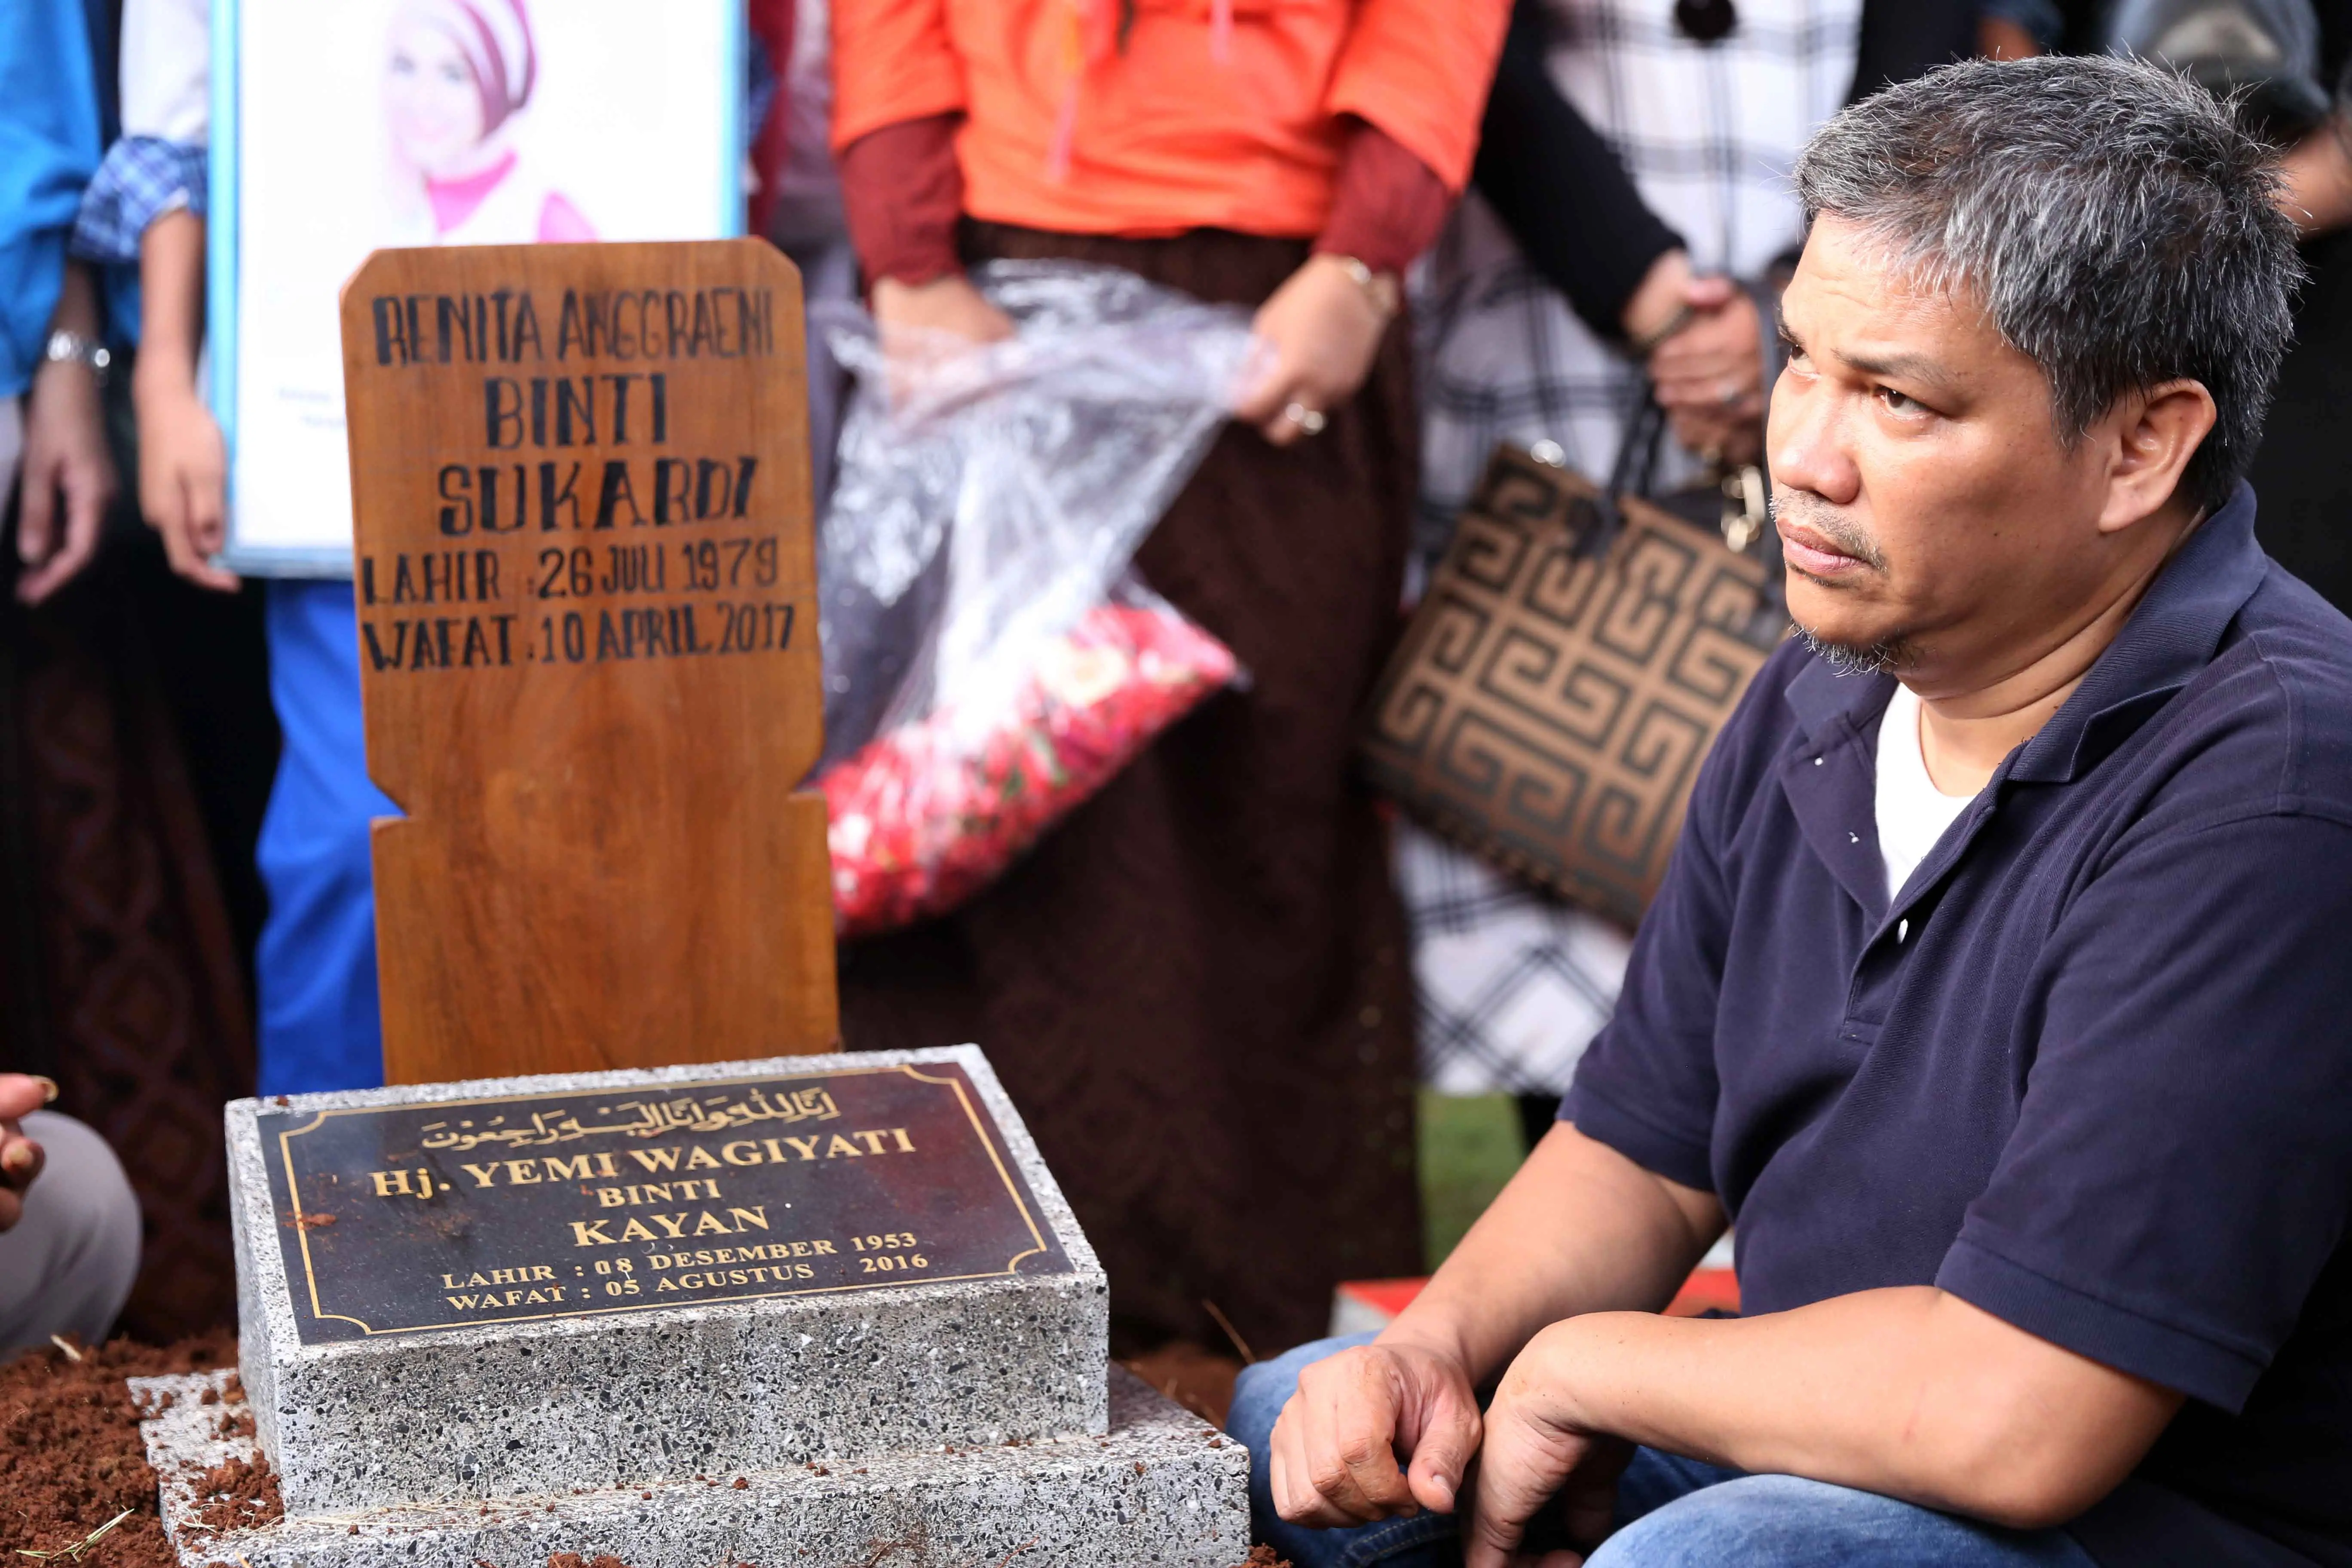 Pemakaman Renita Sukardi (Nurwahyunan/bintang.com)